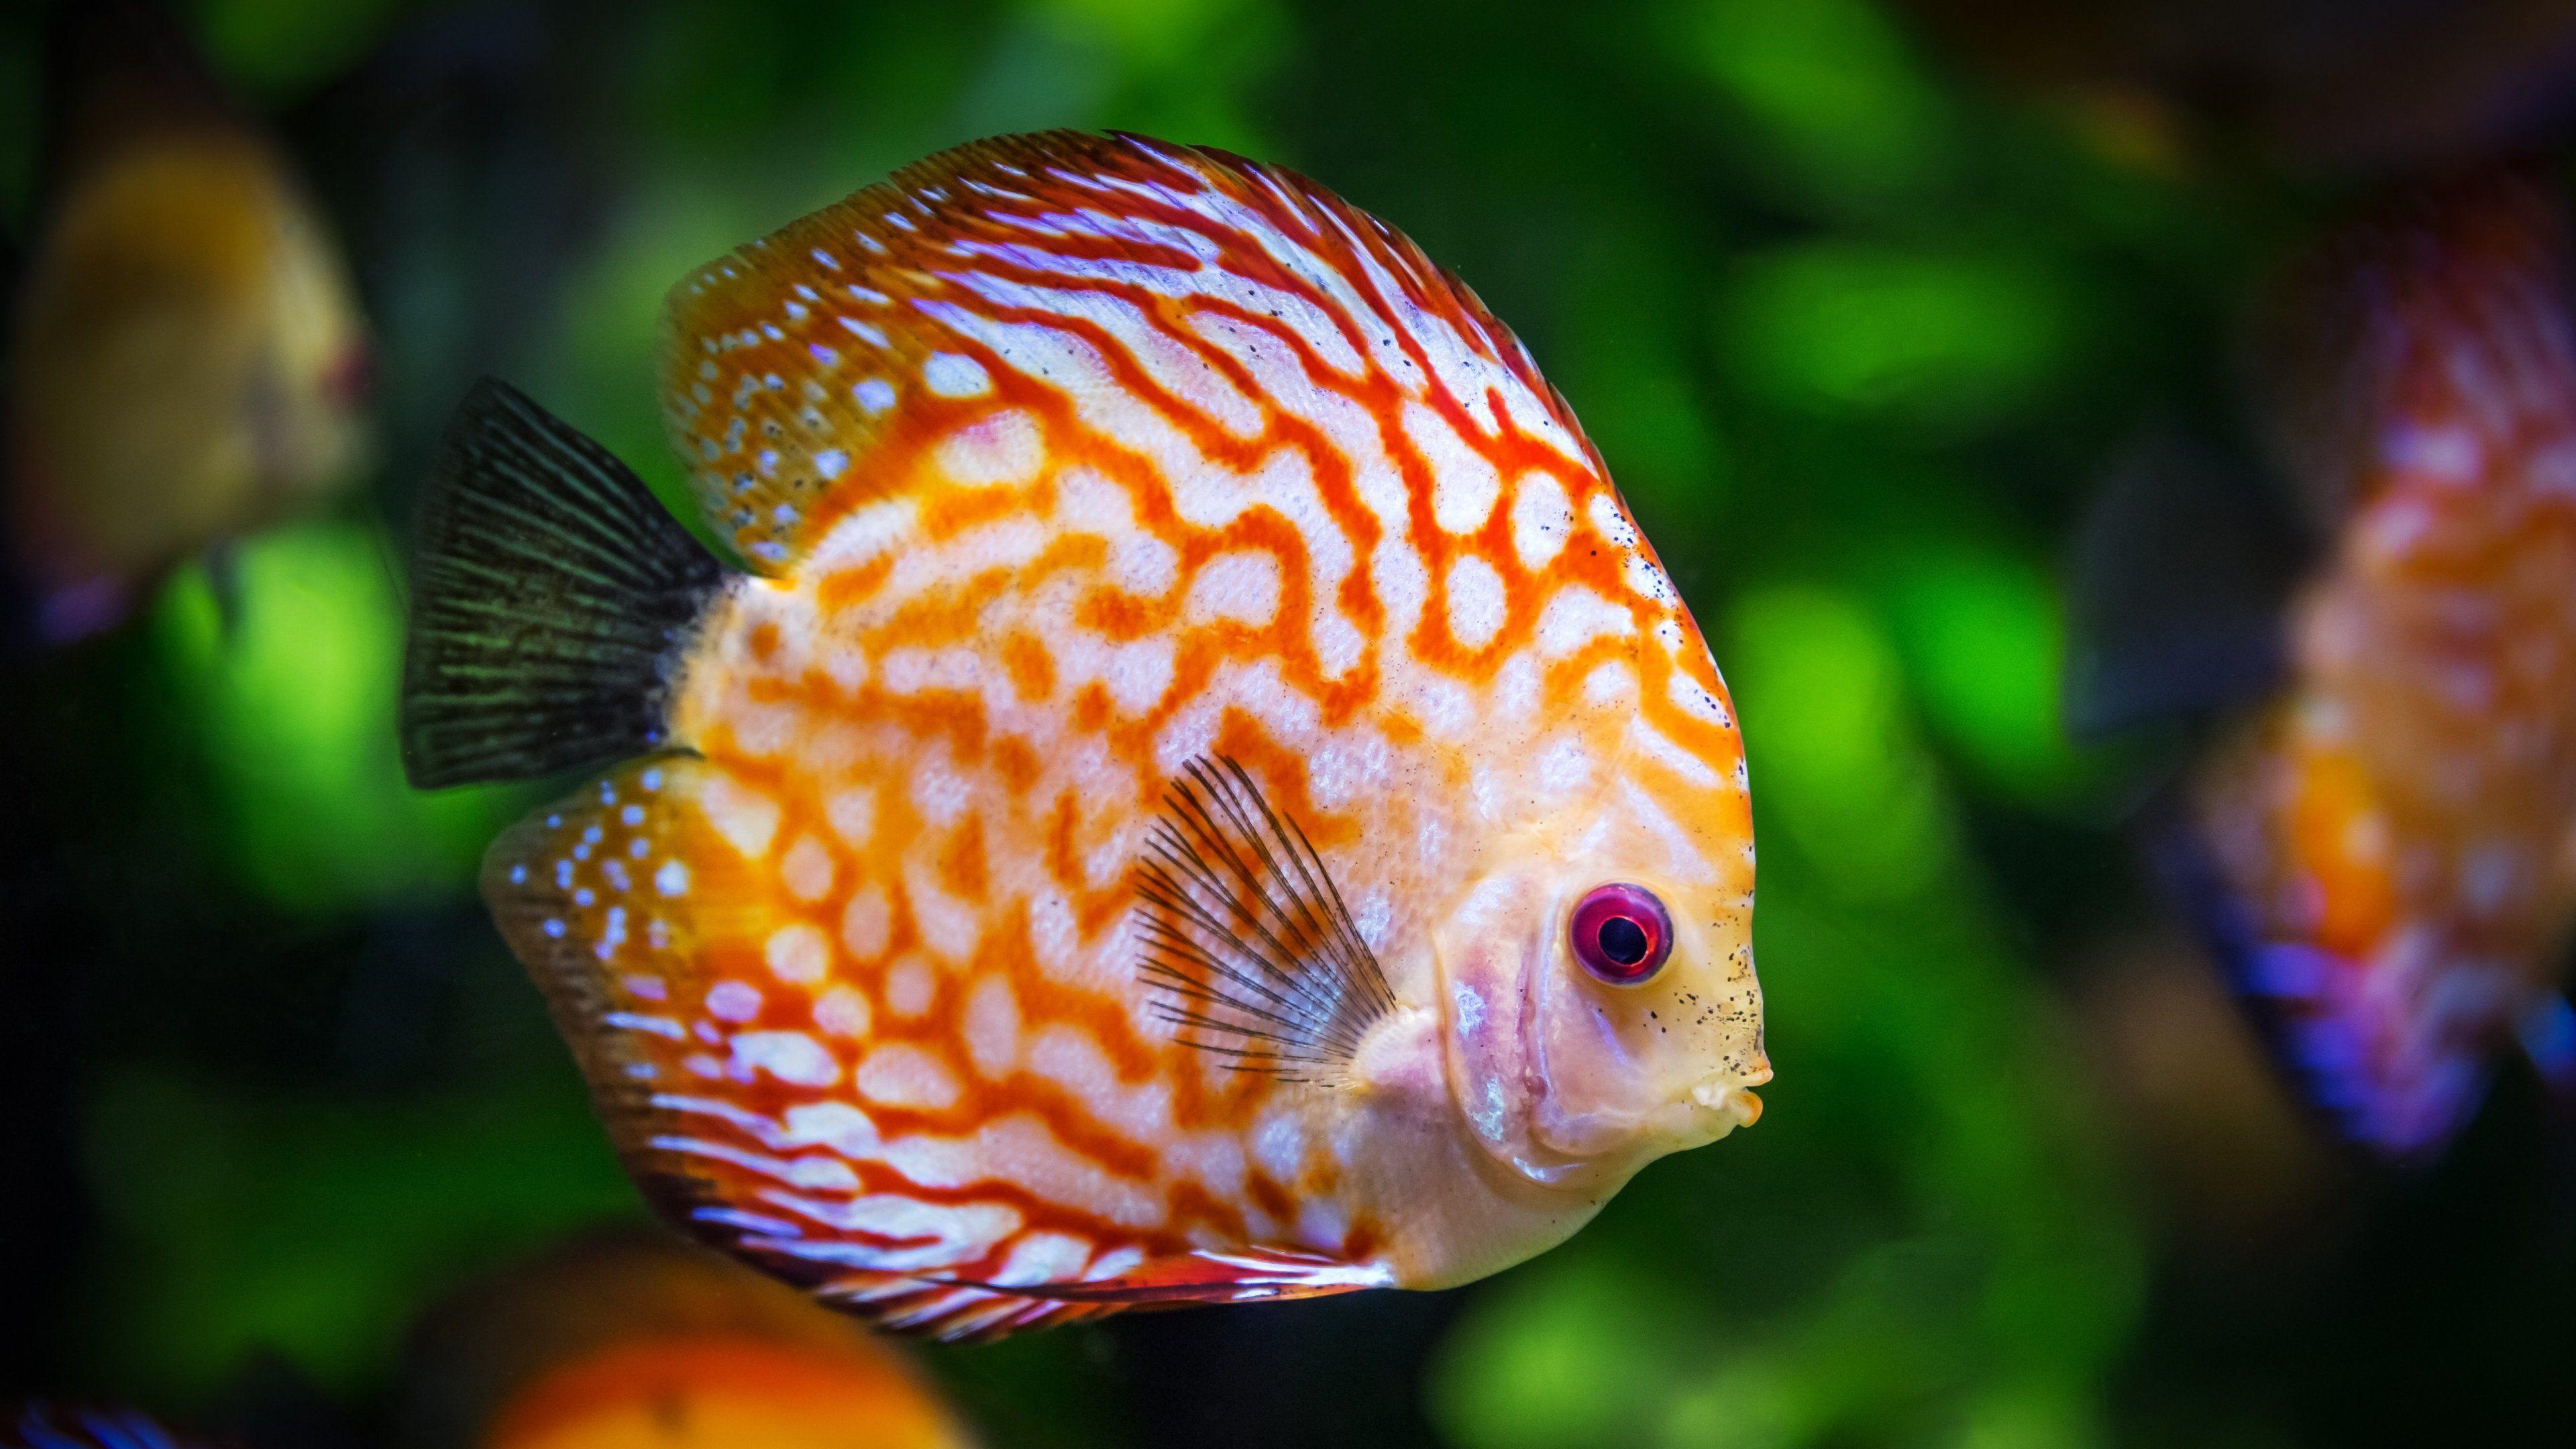 Discus Fish Underwater Wallpaper, Android & Desktop Background